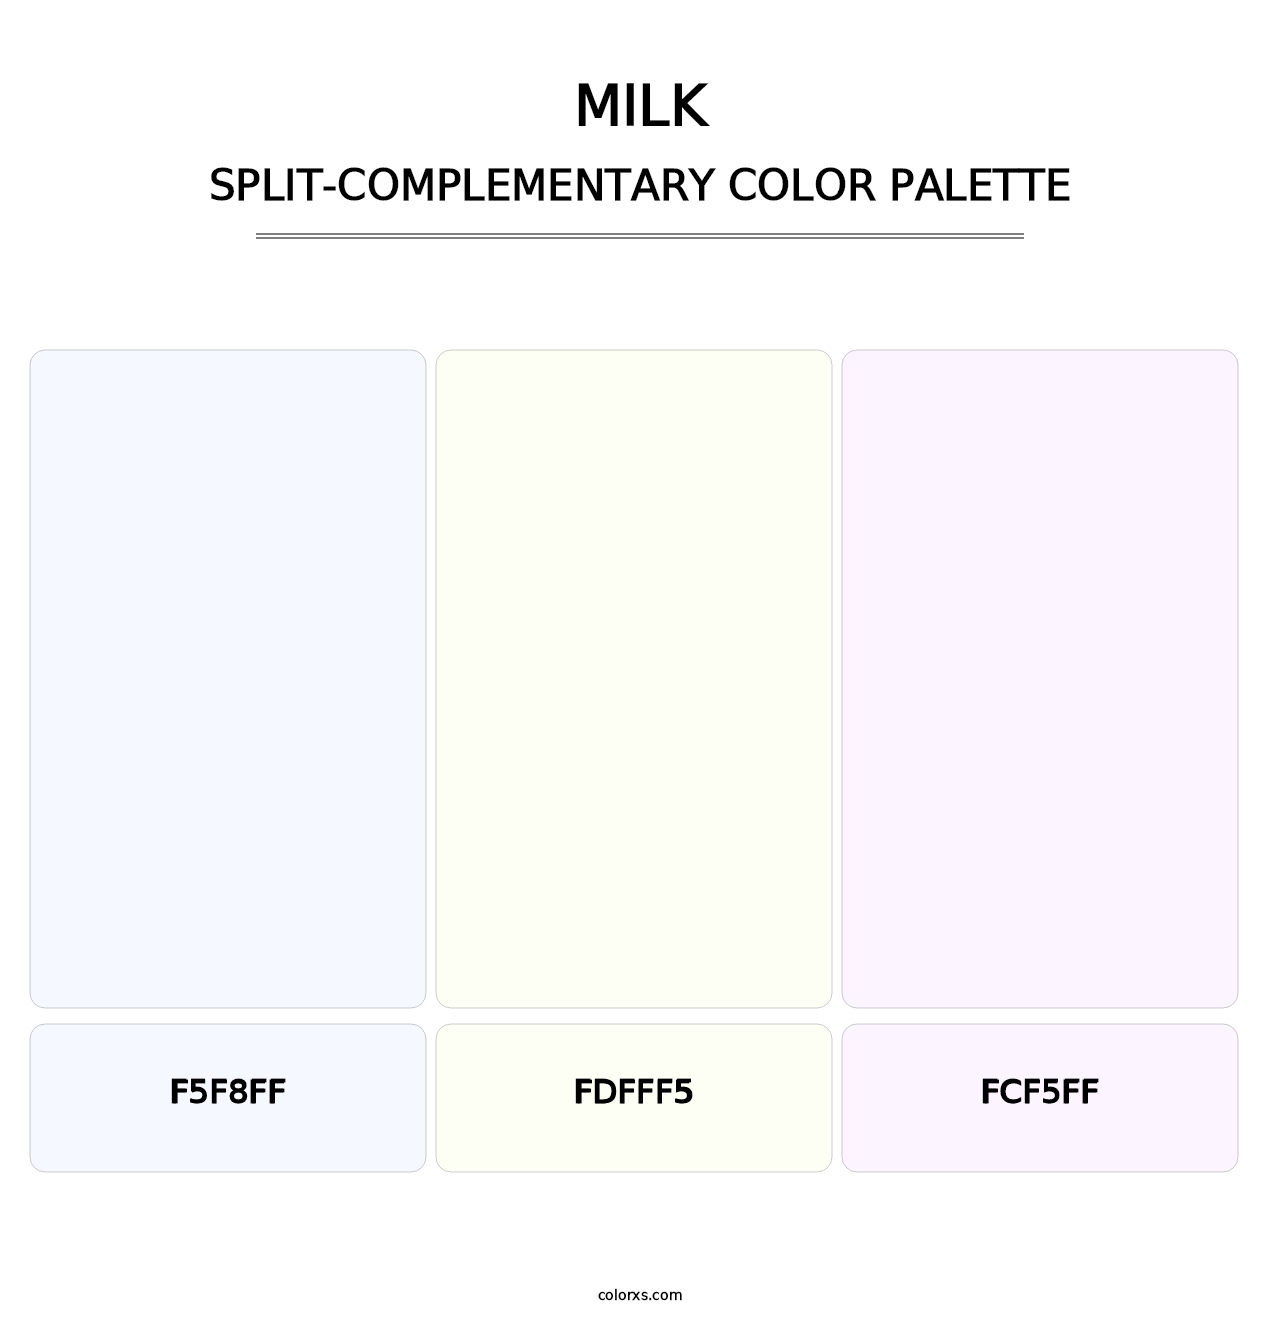 Milk - Split-Complementary Color Palette